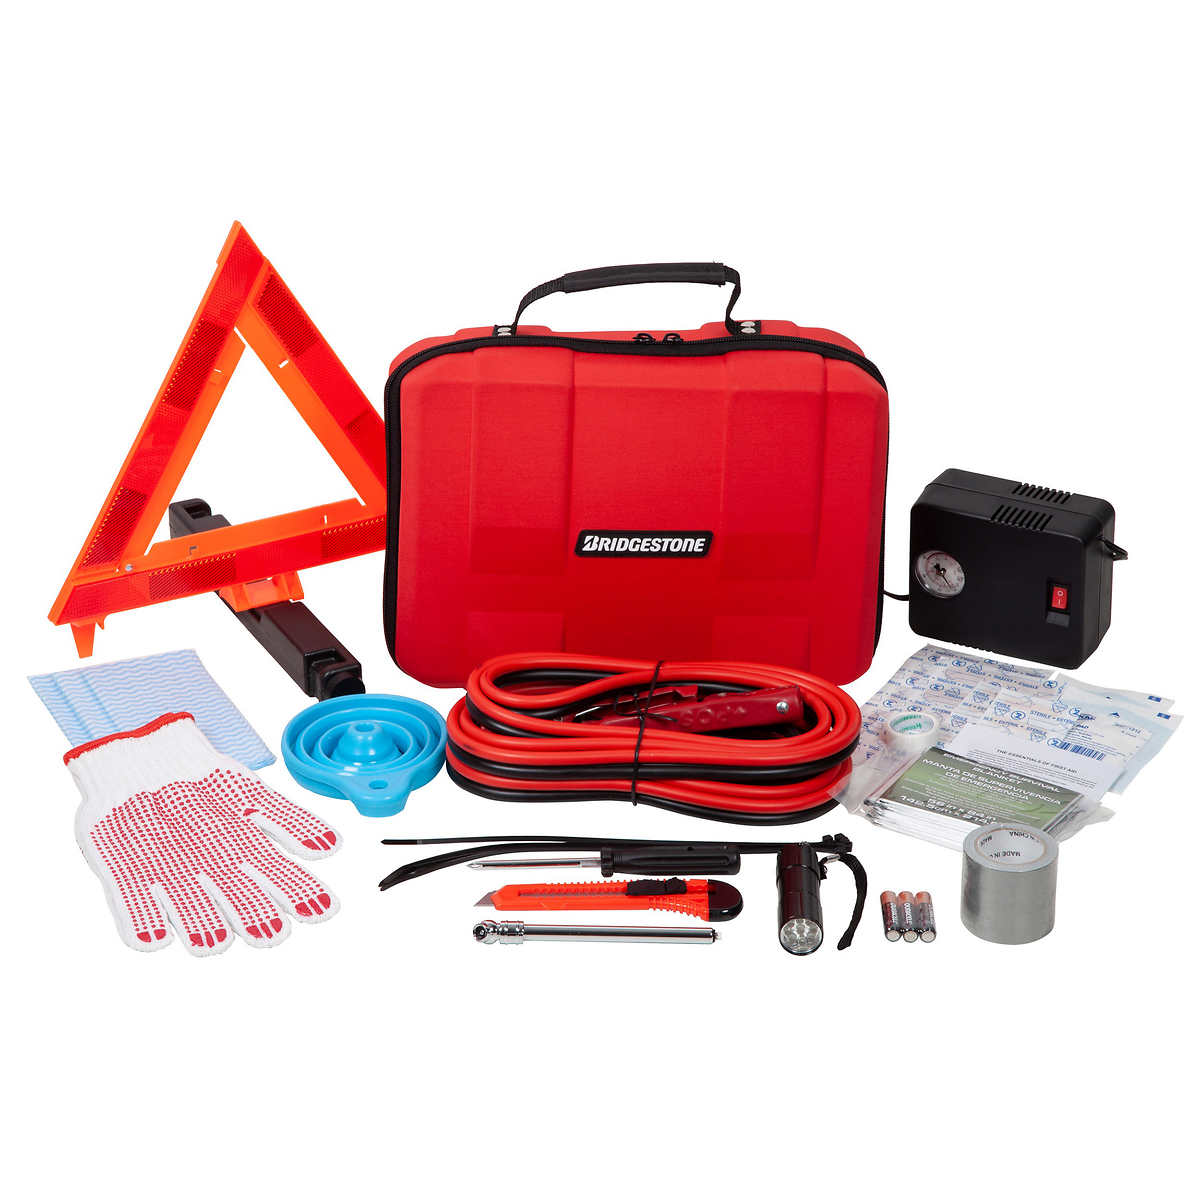 Premium Automotive Emergency Kit